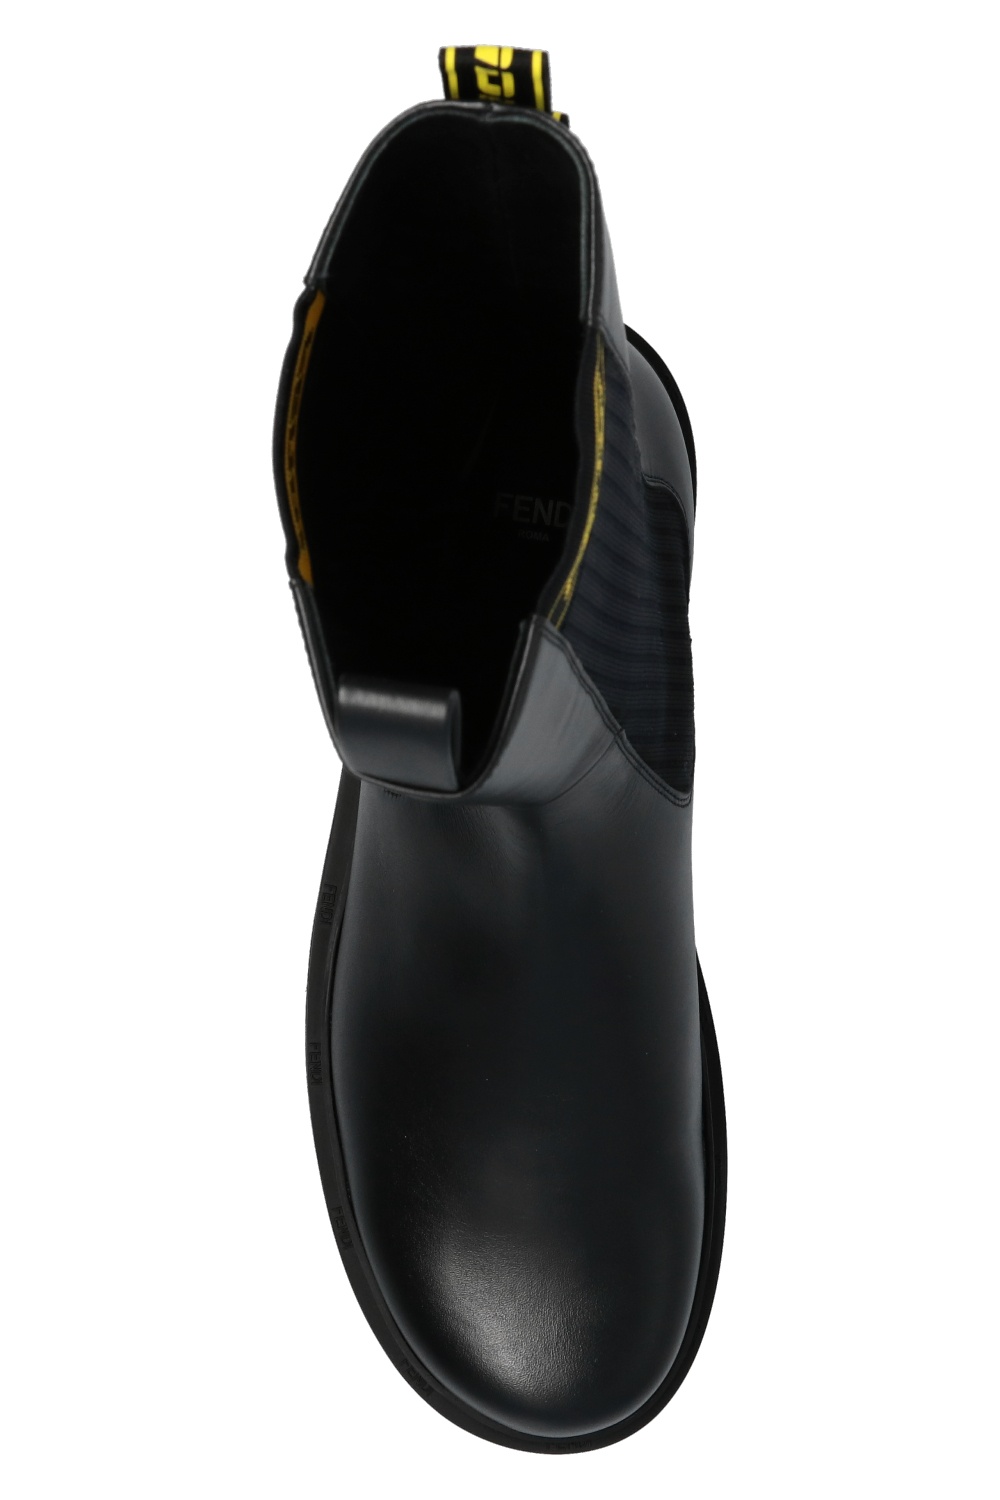 Fendi Black calf leather from FF-Vertigo fendi